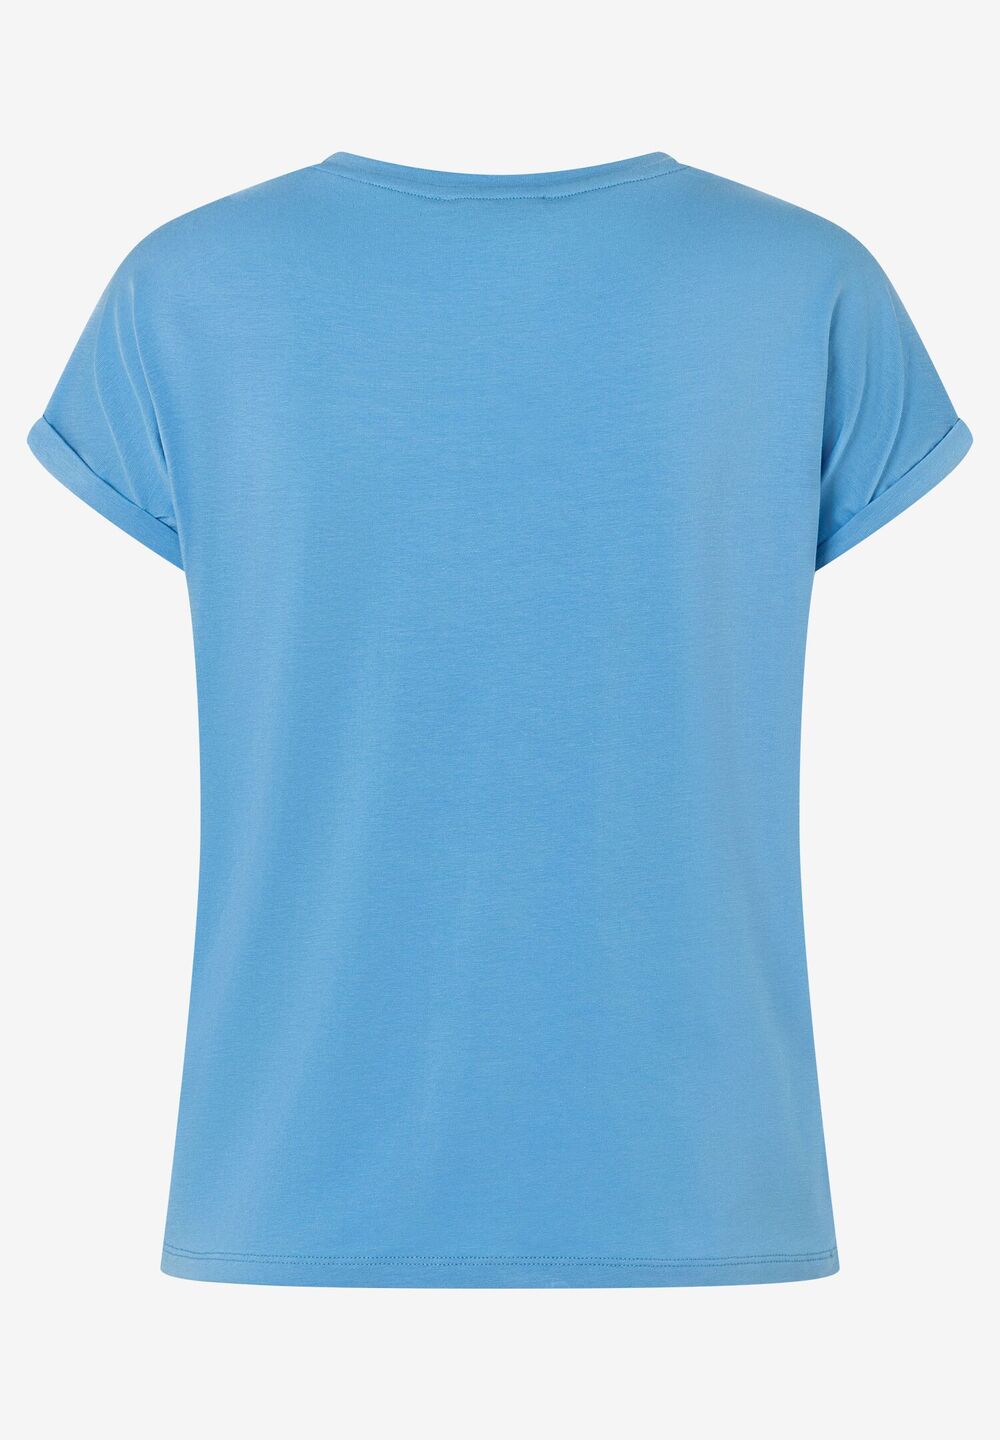 Wording Shirt, happy blue, Sommer-Kollektion, blau Rückansicht